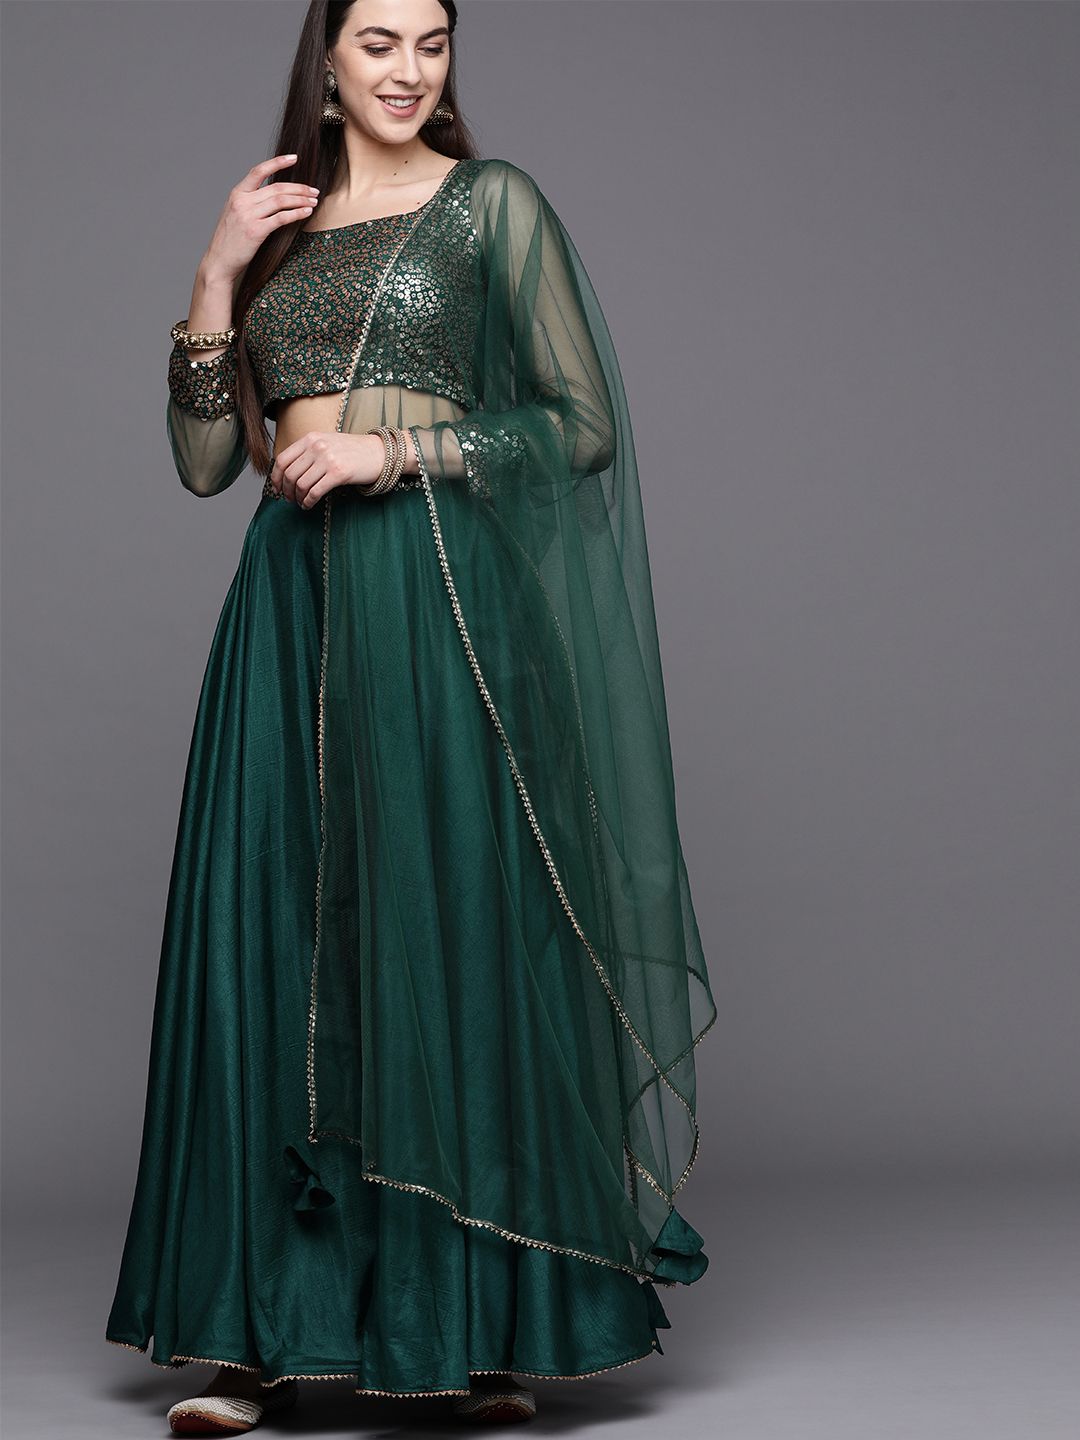 Inddus Green Embellished Semi-Stitched Lehenga & Blouse with Dupatta Price in India